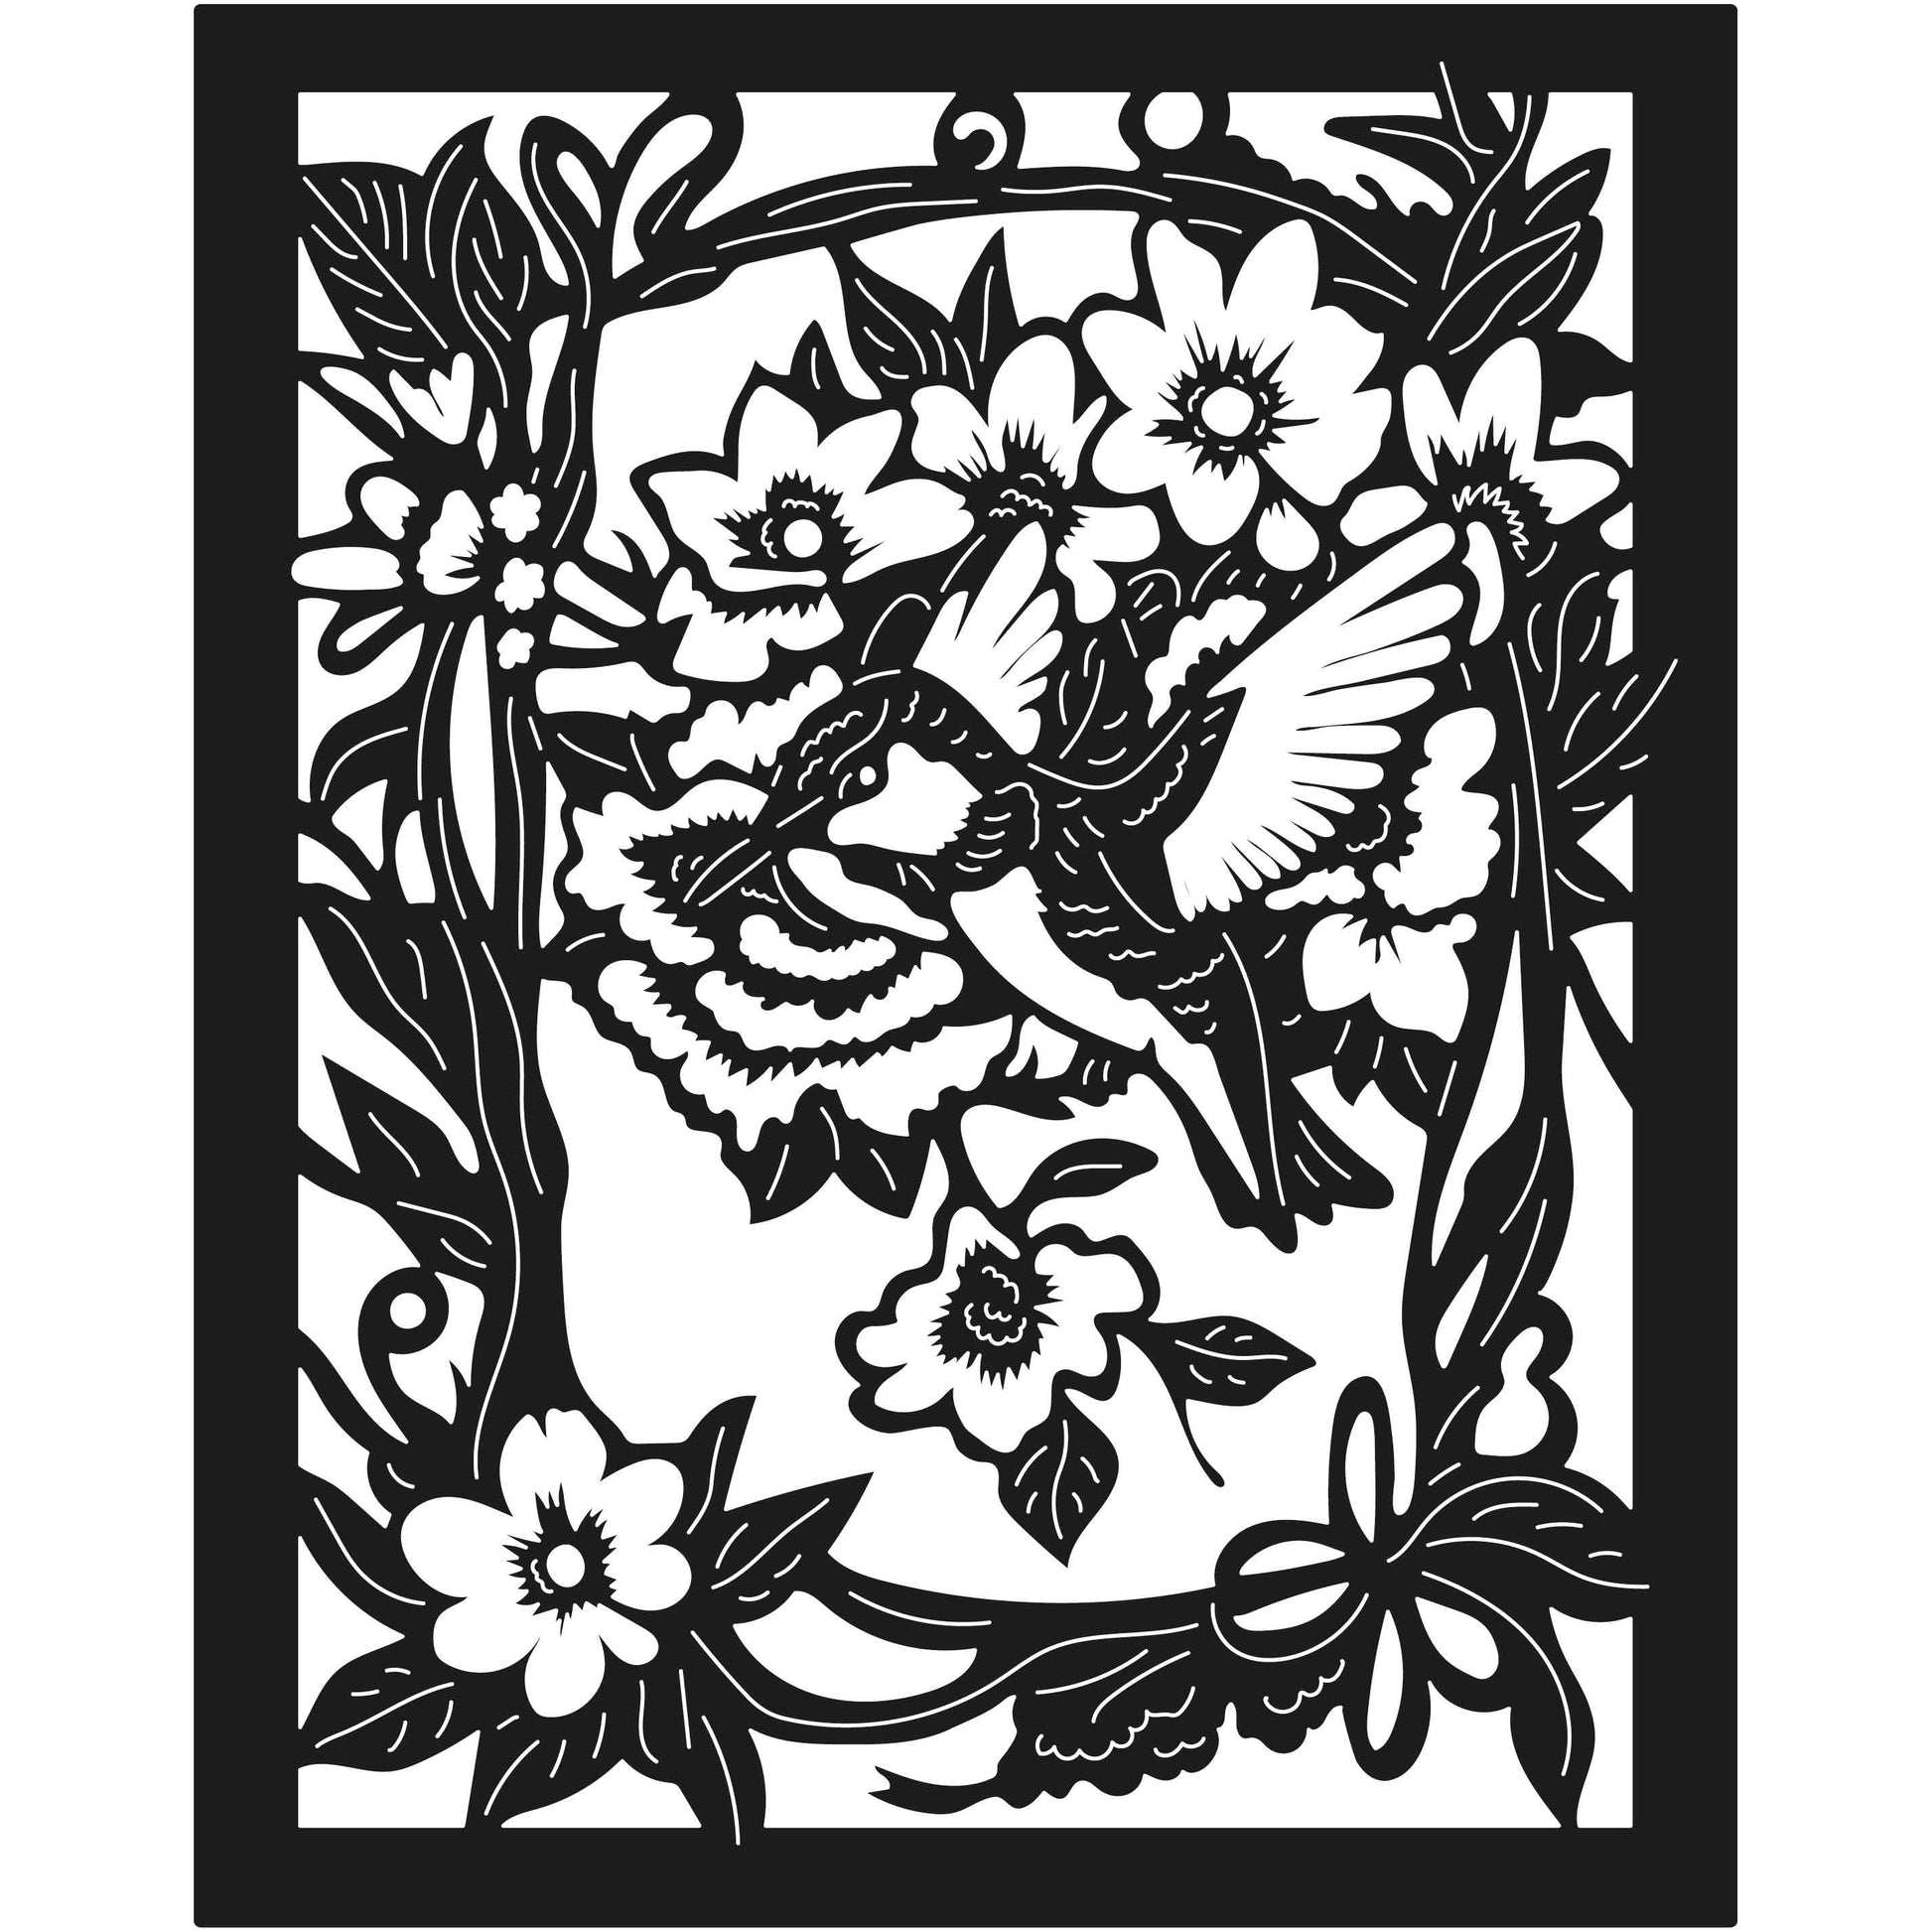 Hummingbird flower panel 05